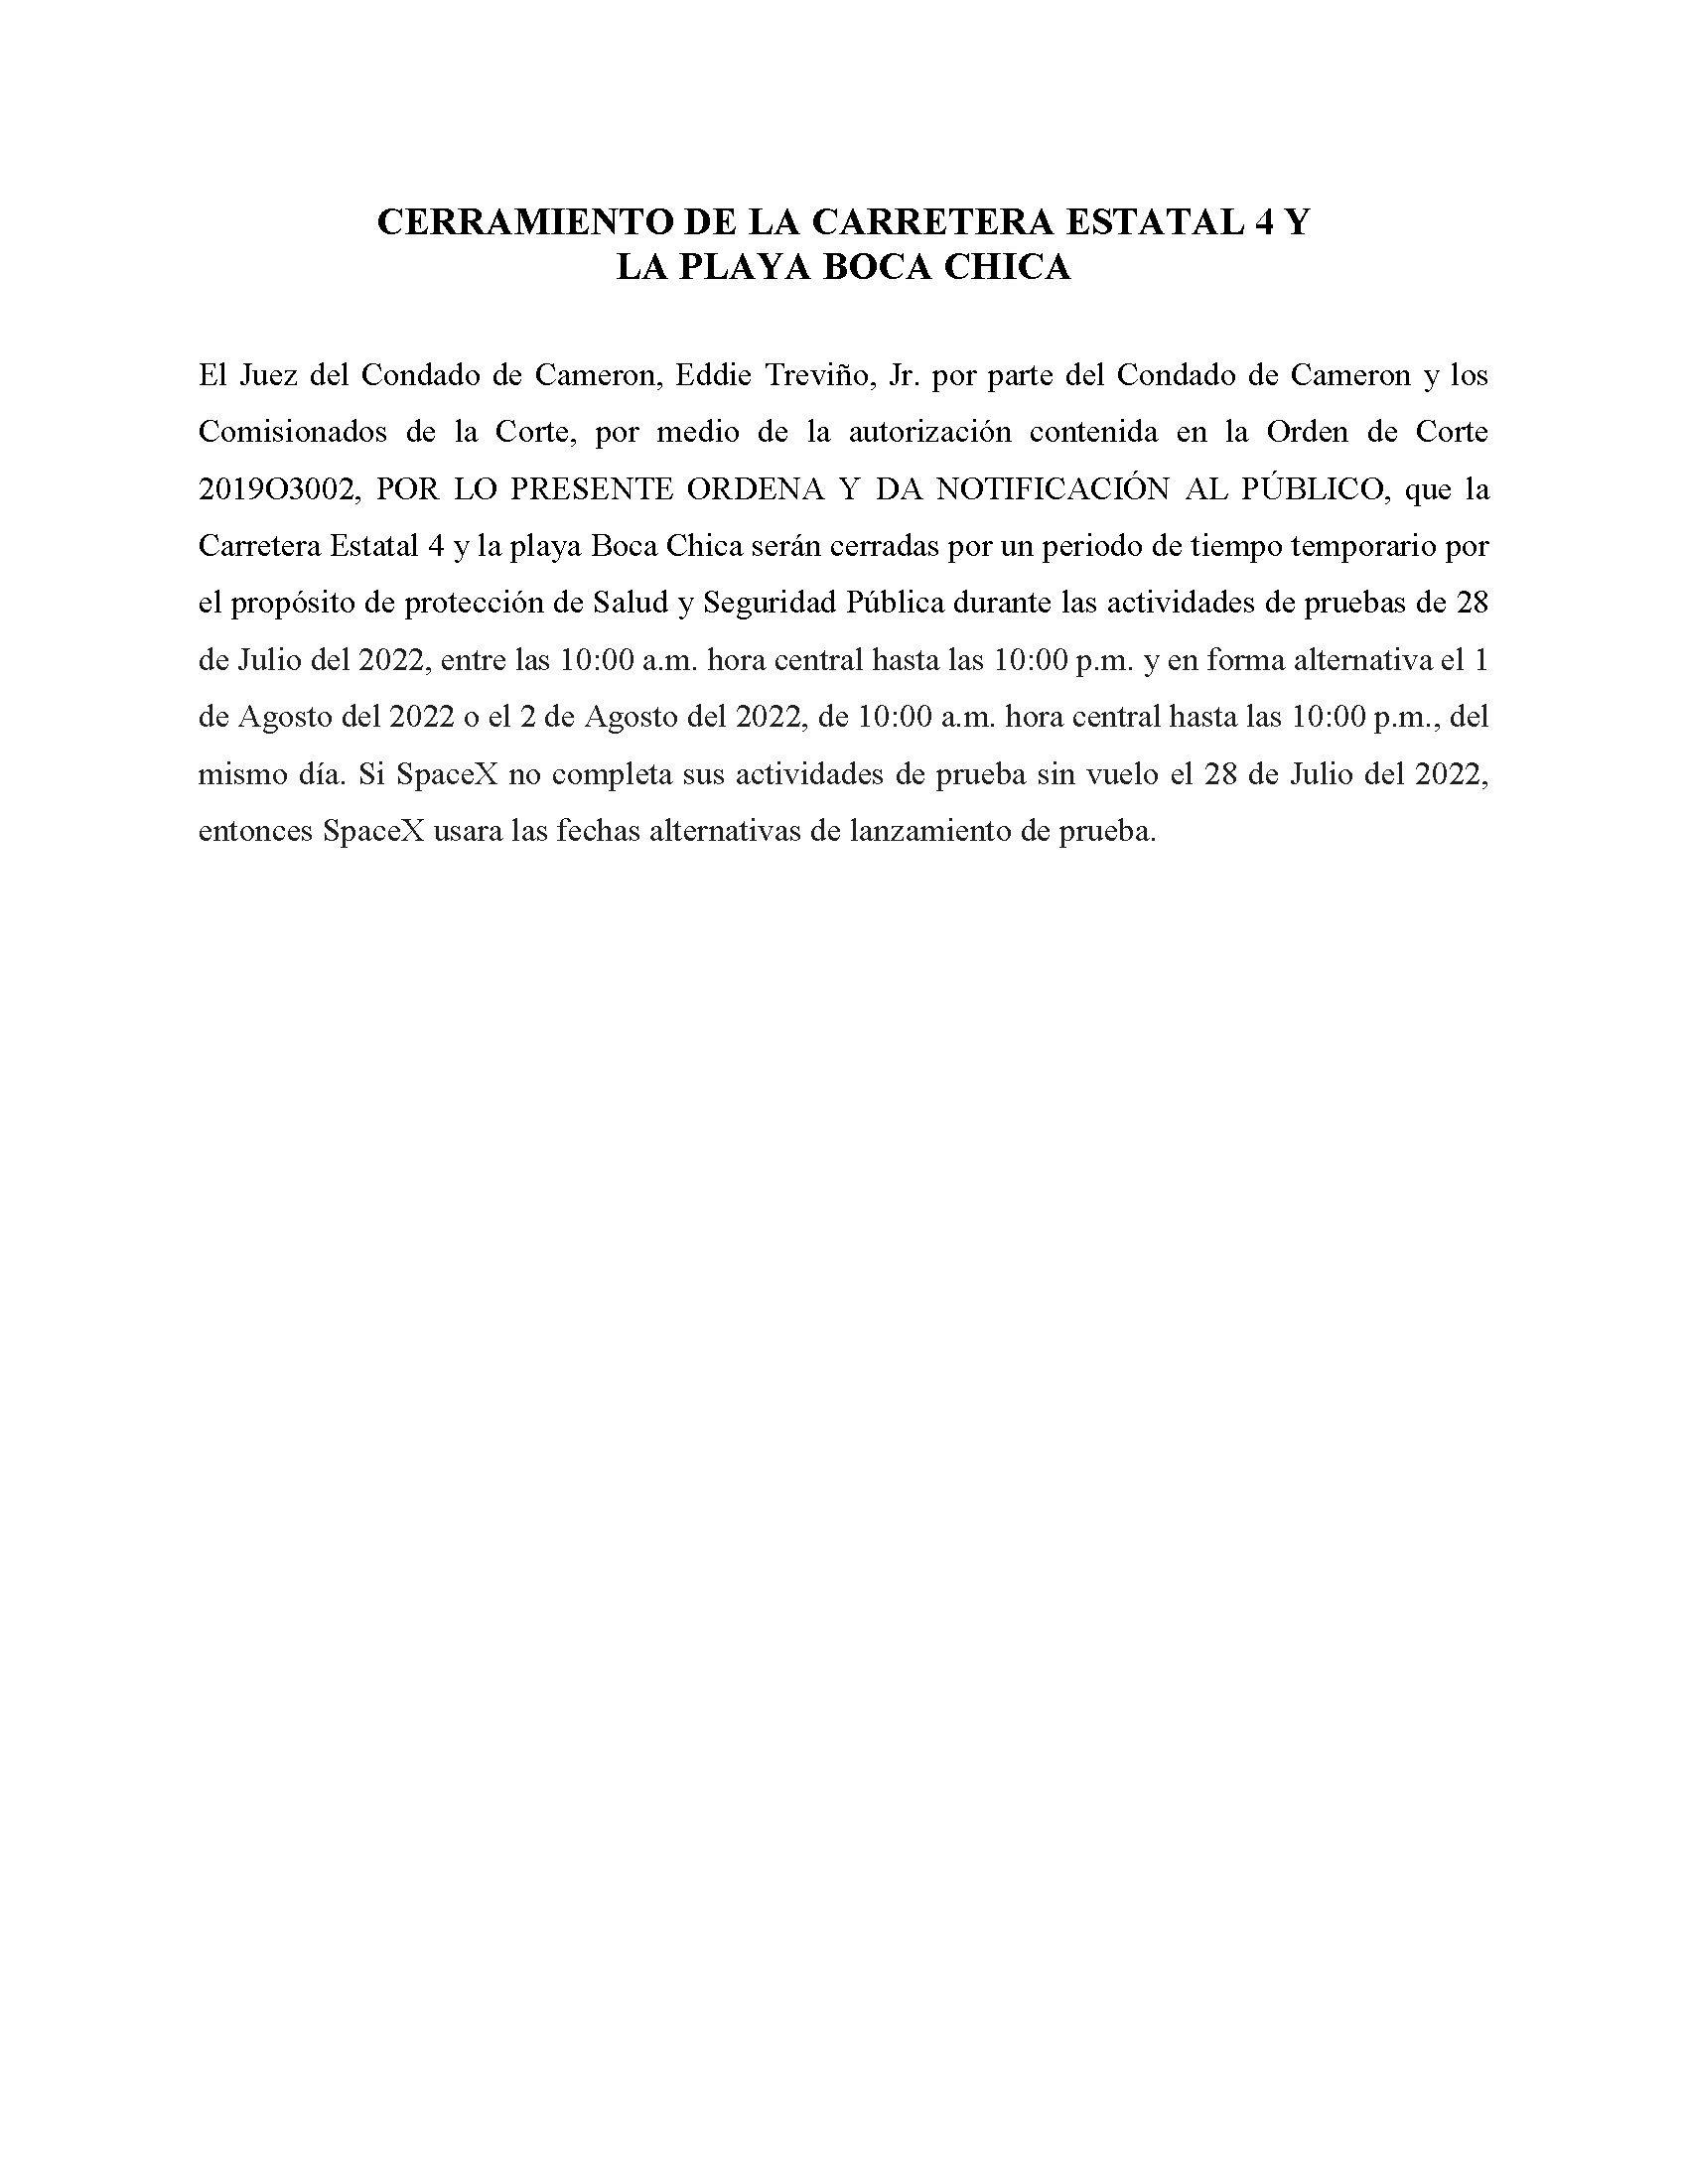 ORDER.CLOSURE OF HIGHWAY 4 Y LA PLAYA BOCA CHICA.SPANISH.07.28.2022